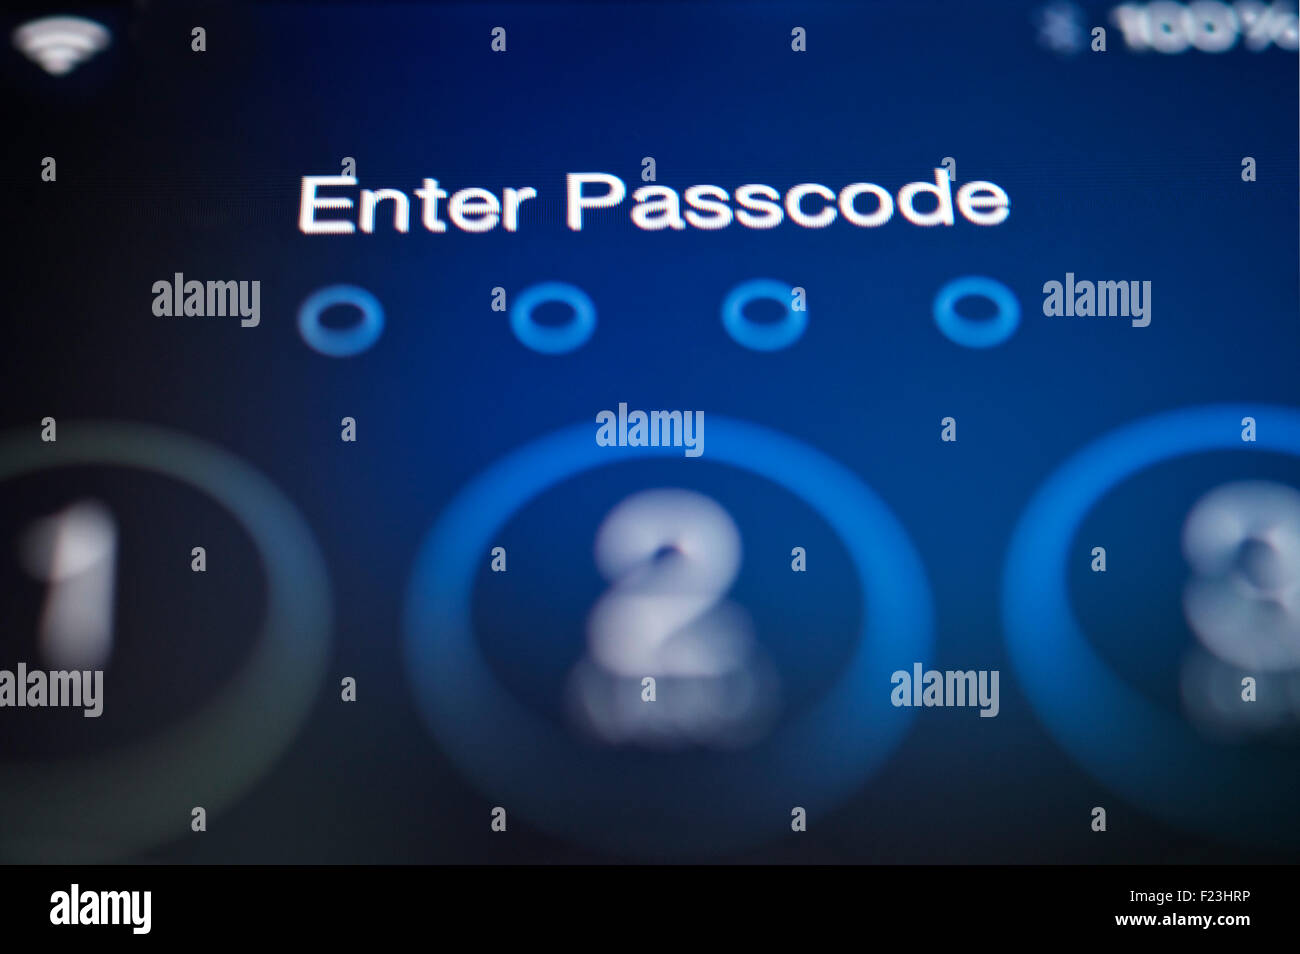 Enter Passcode. Touch screen lock screen requesting passcode. Stock Photo